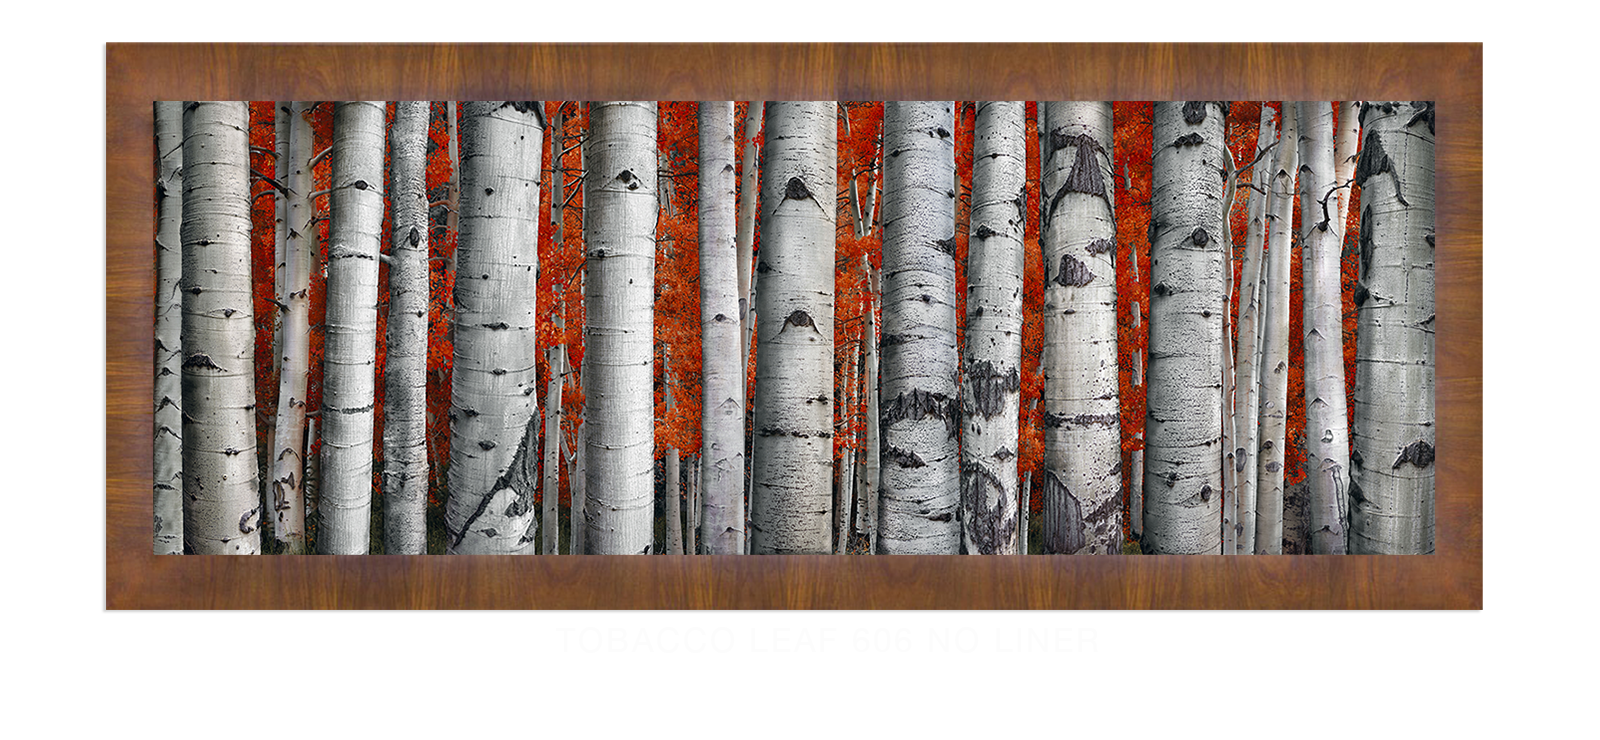 25ASPEN Tobacco Leaf 606 w_No Liner T